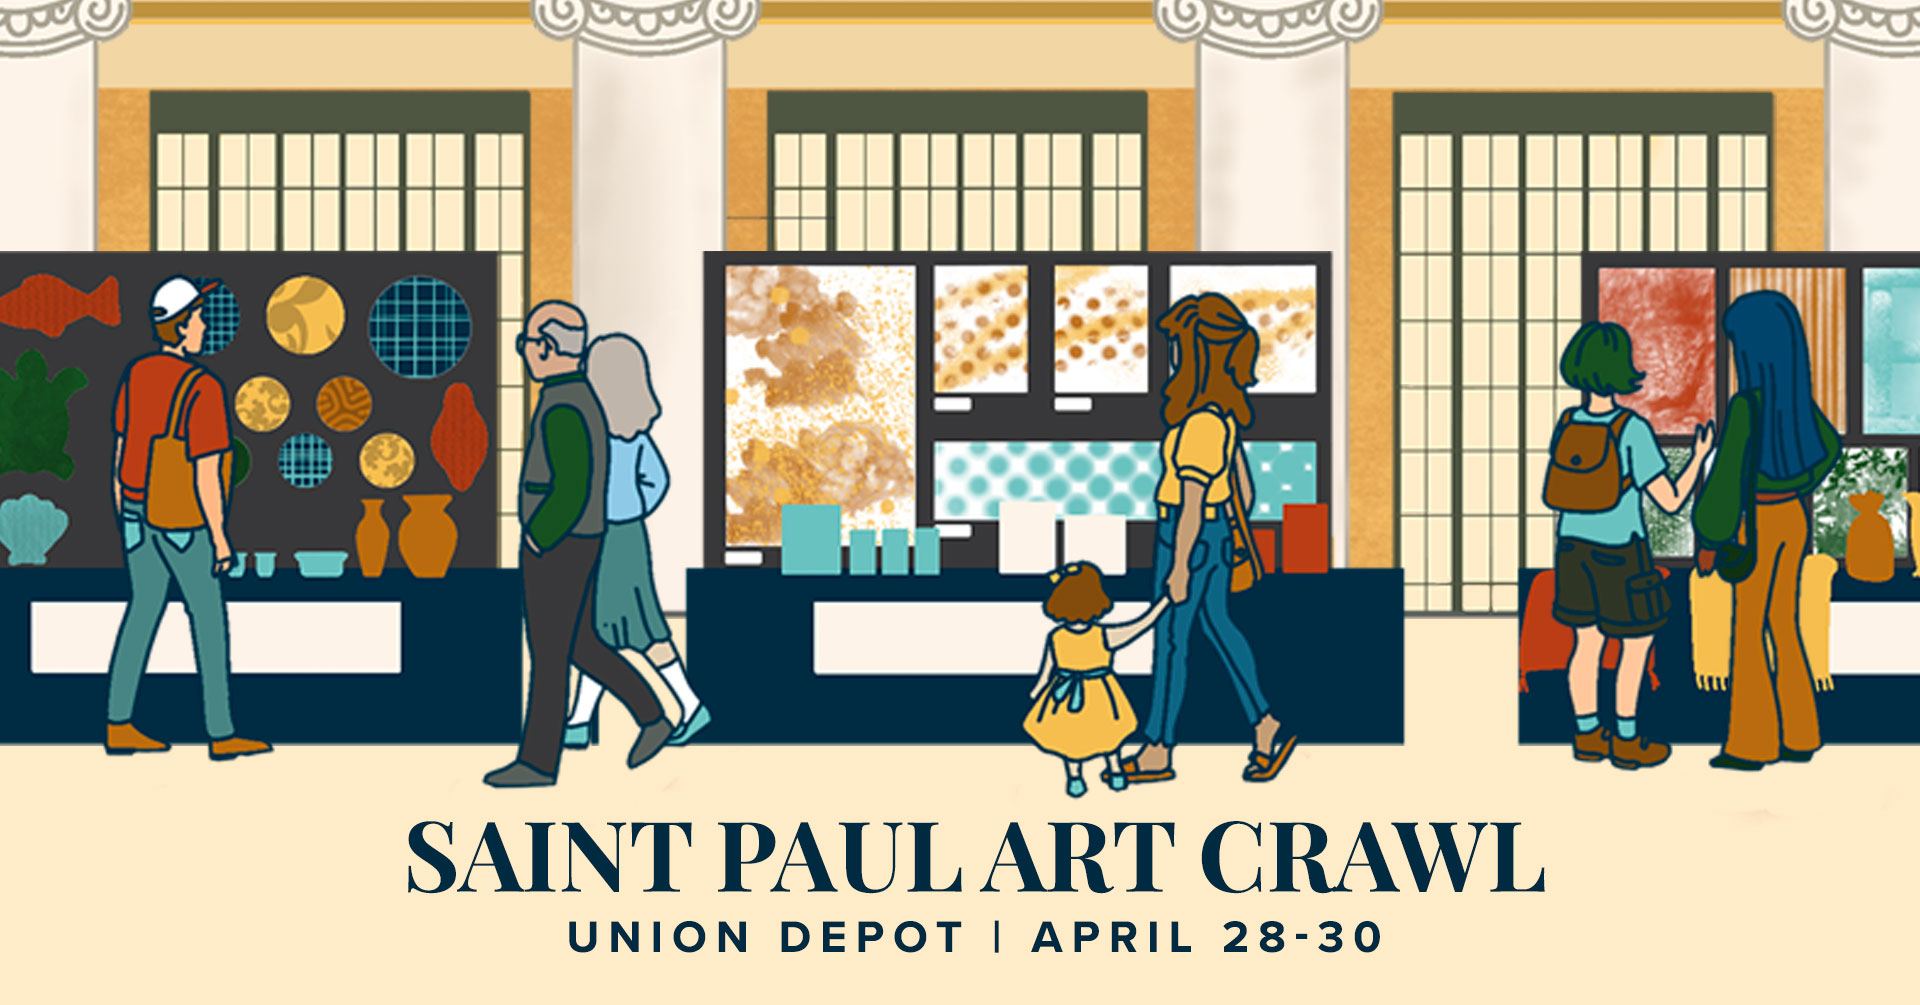 saint paul art crawl union depot